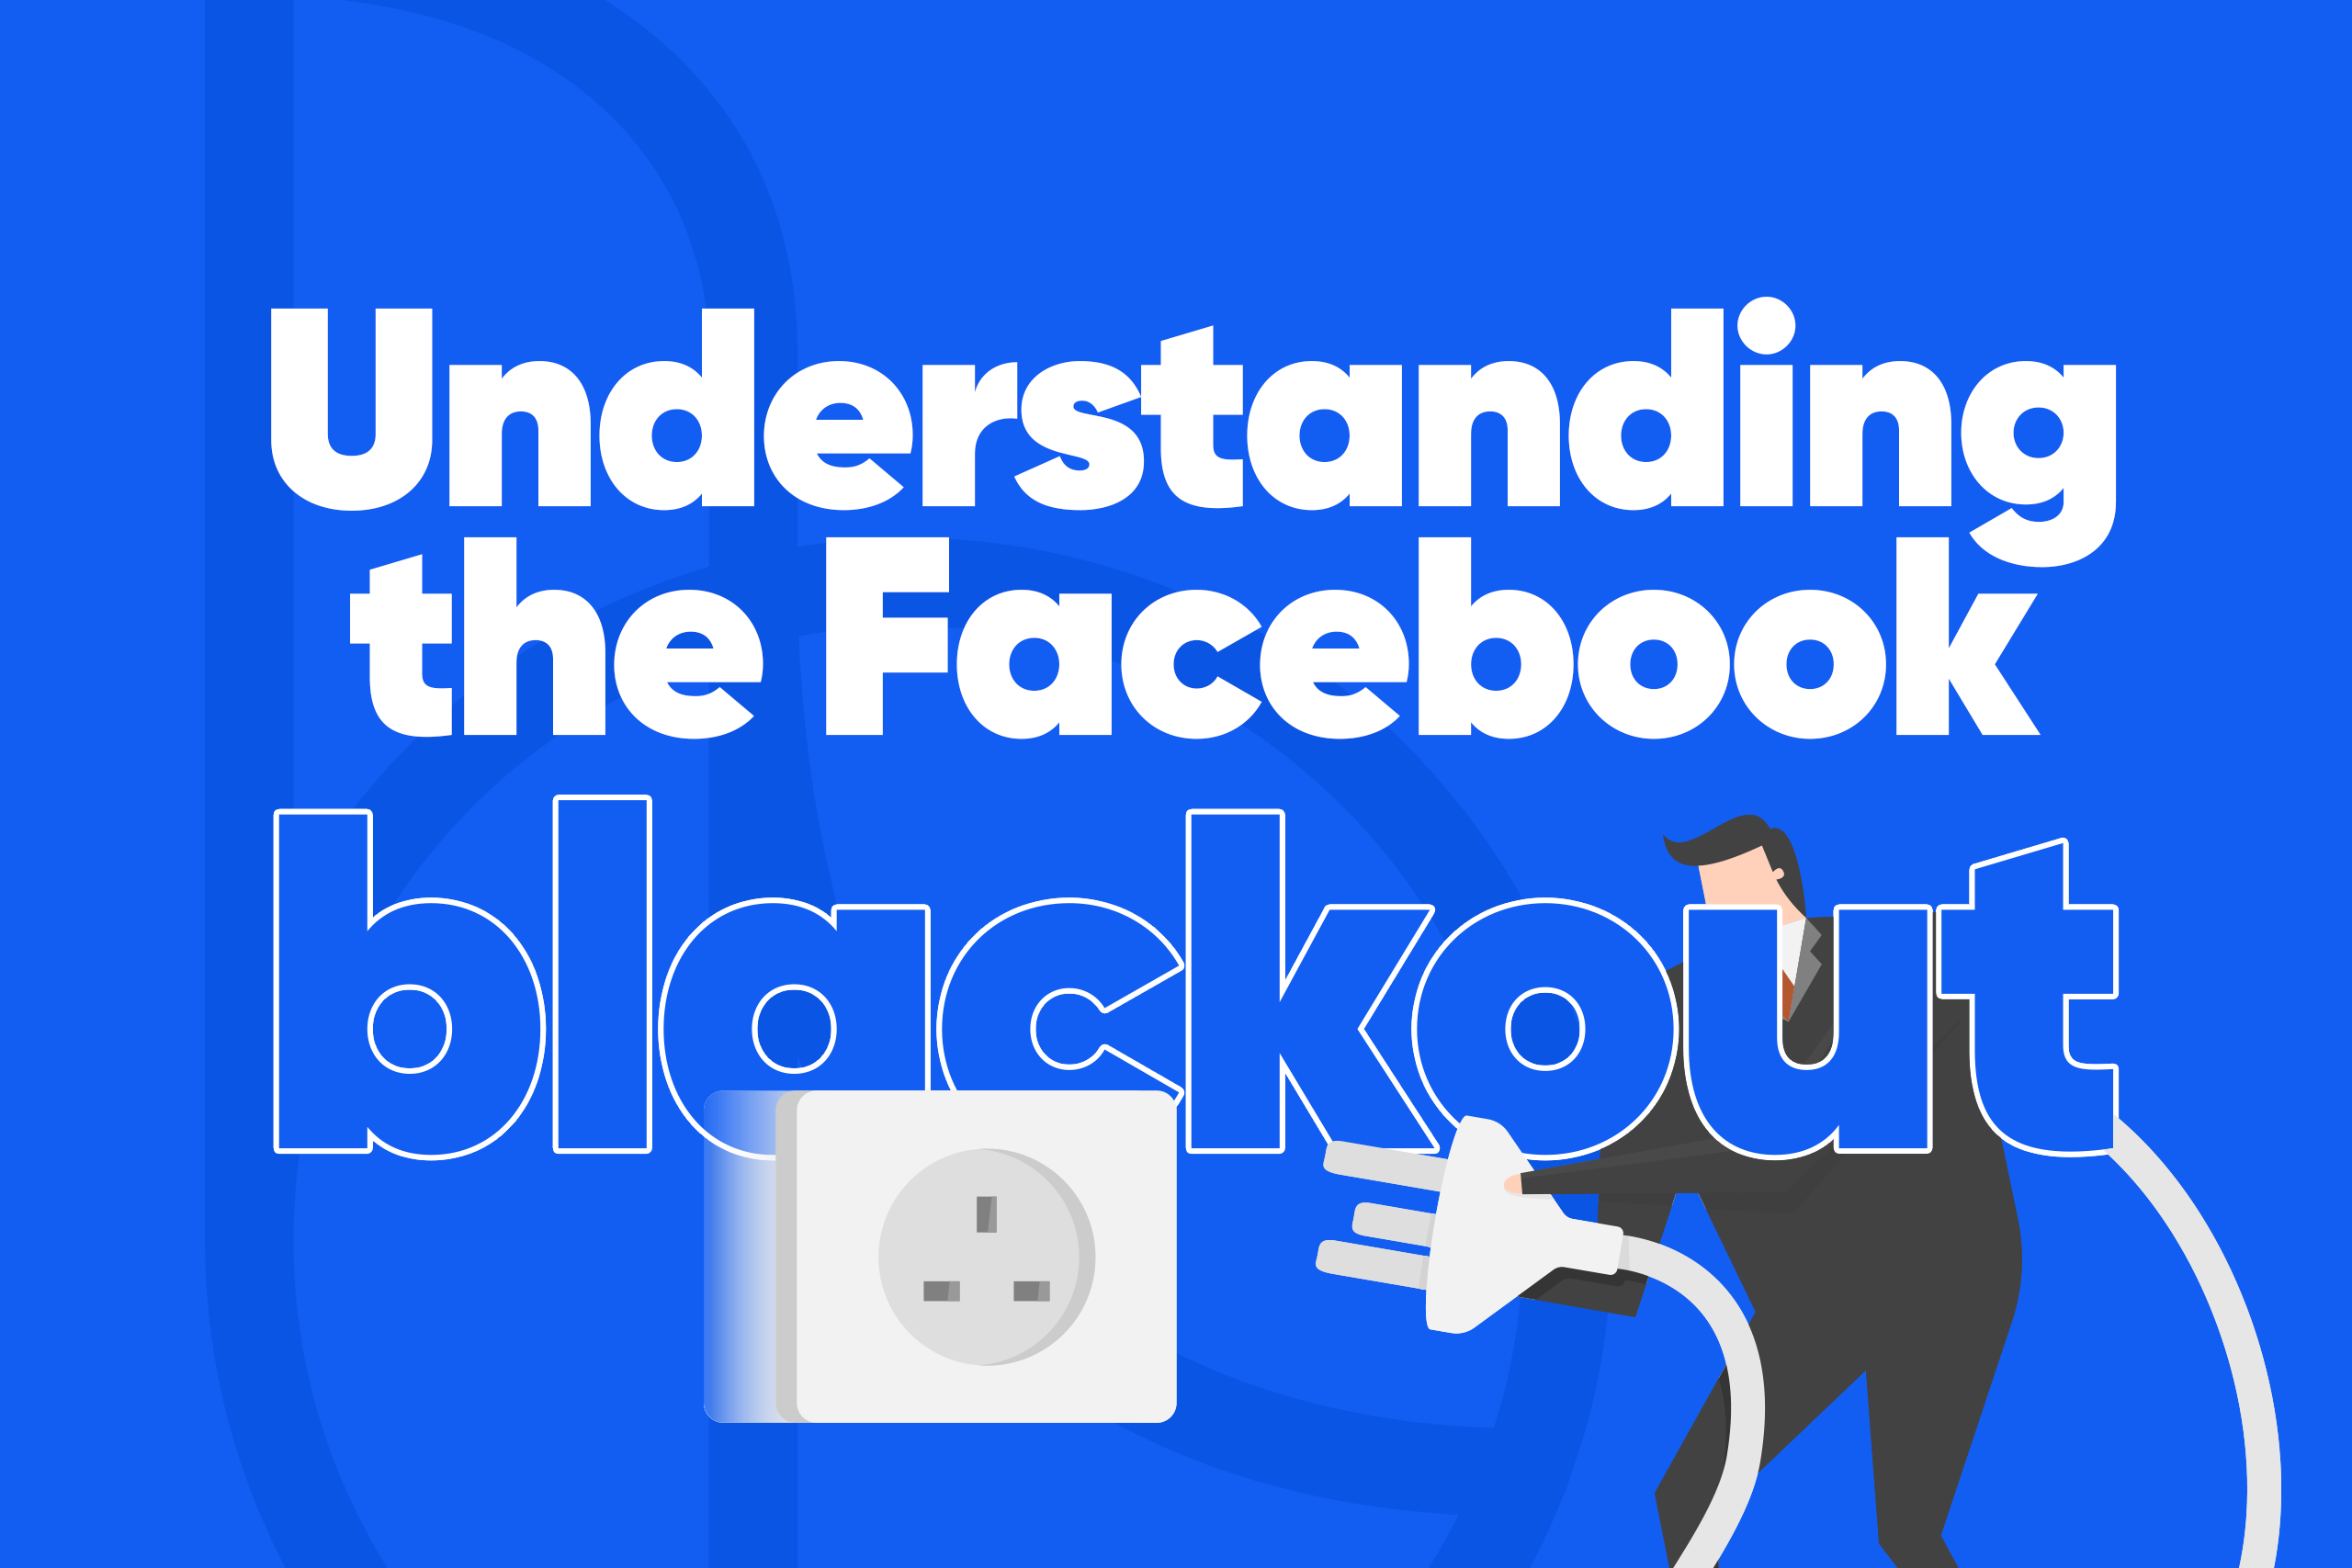 Understanding Facebook Blackout